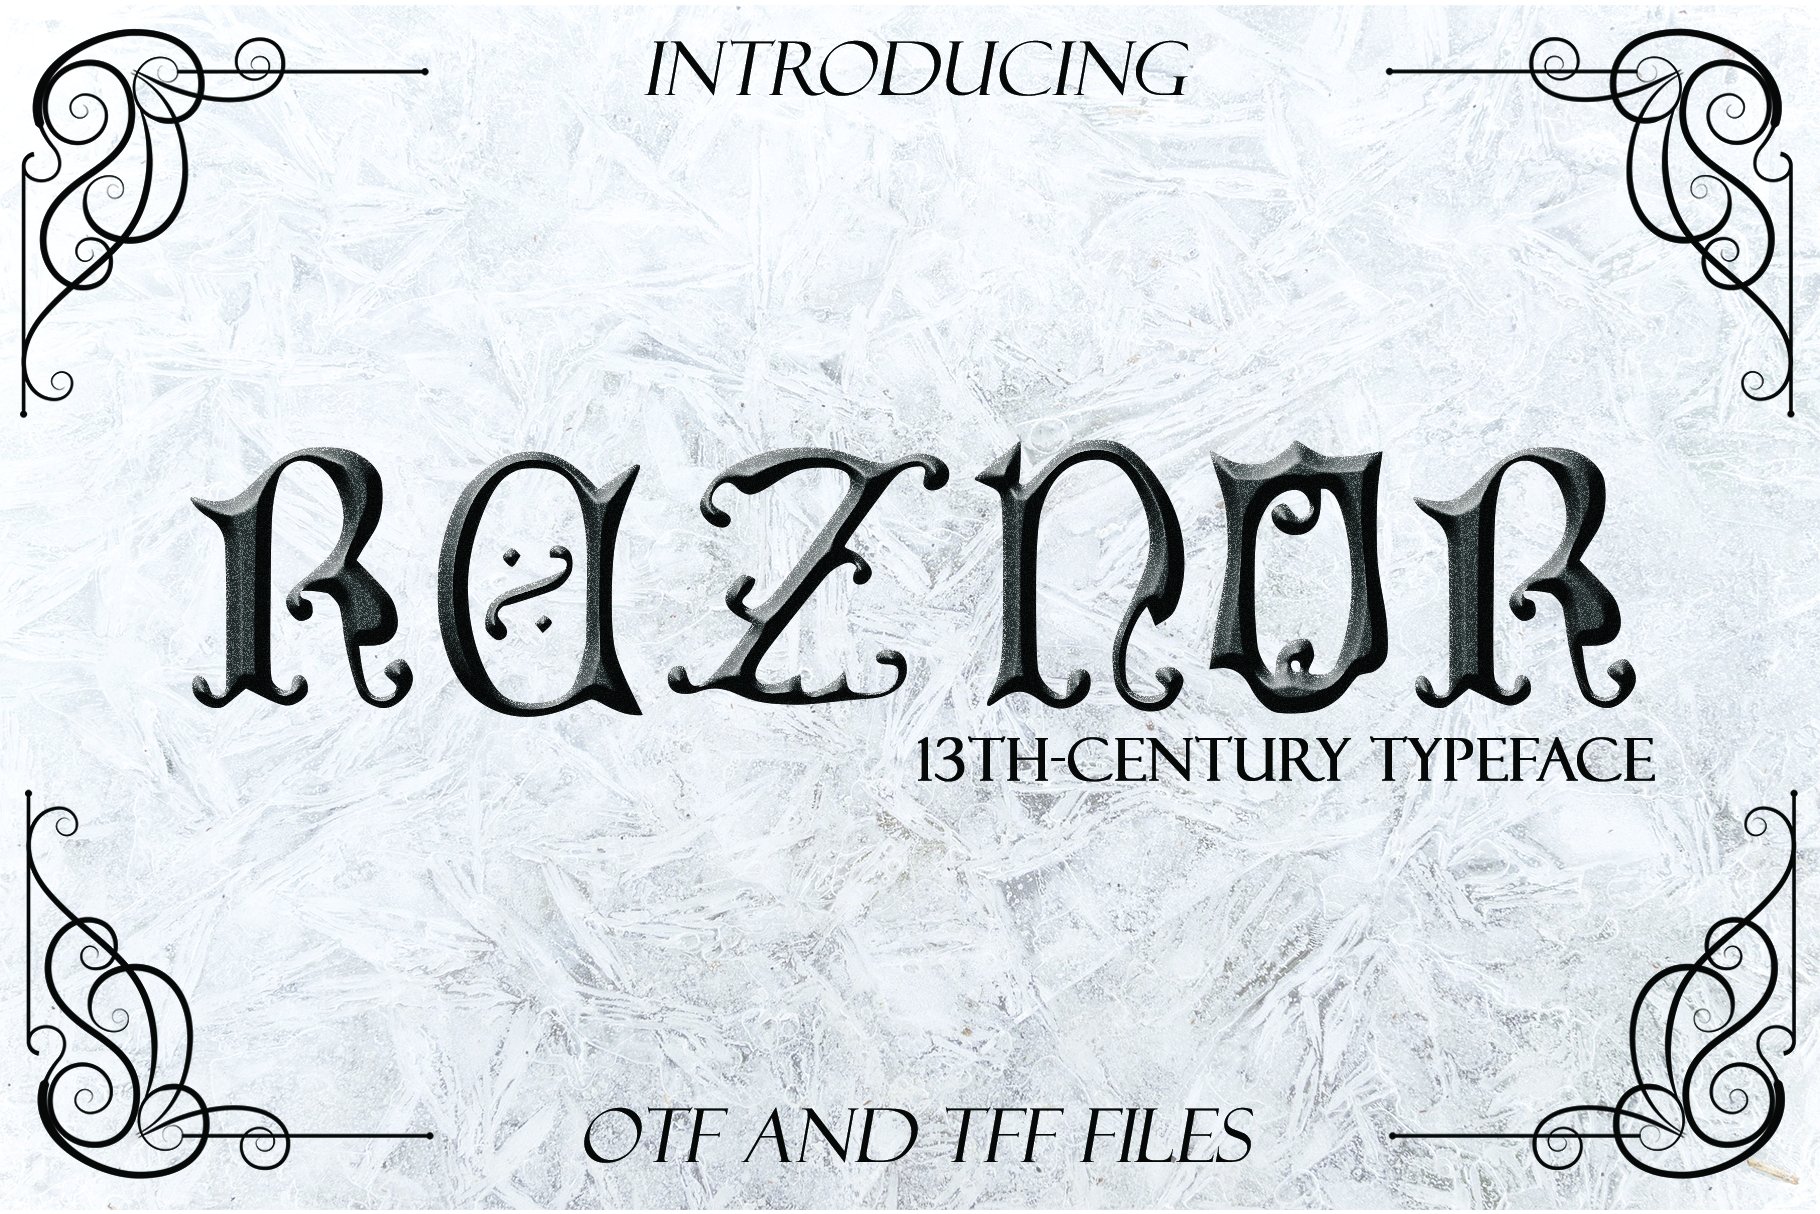 REZNOR, a Blackletter Typeface cover image.